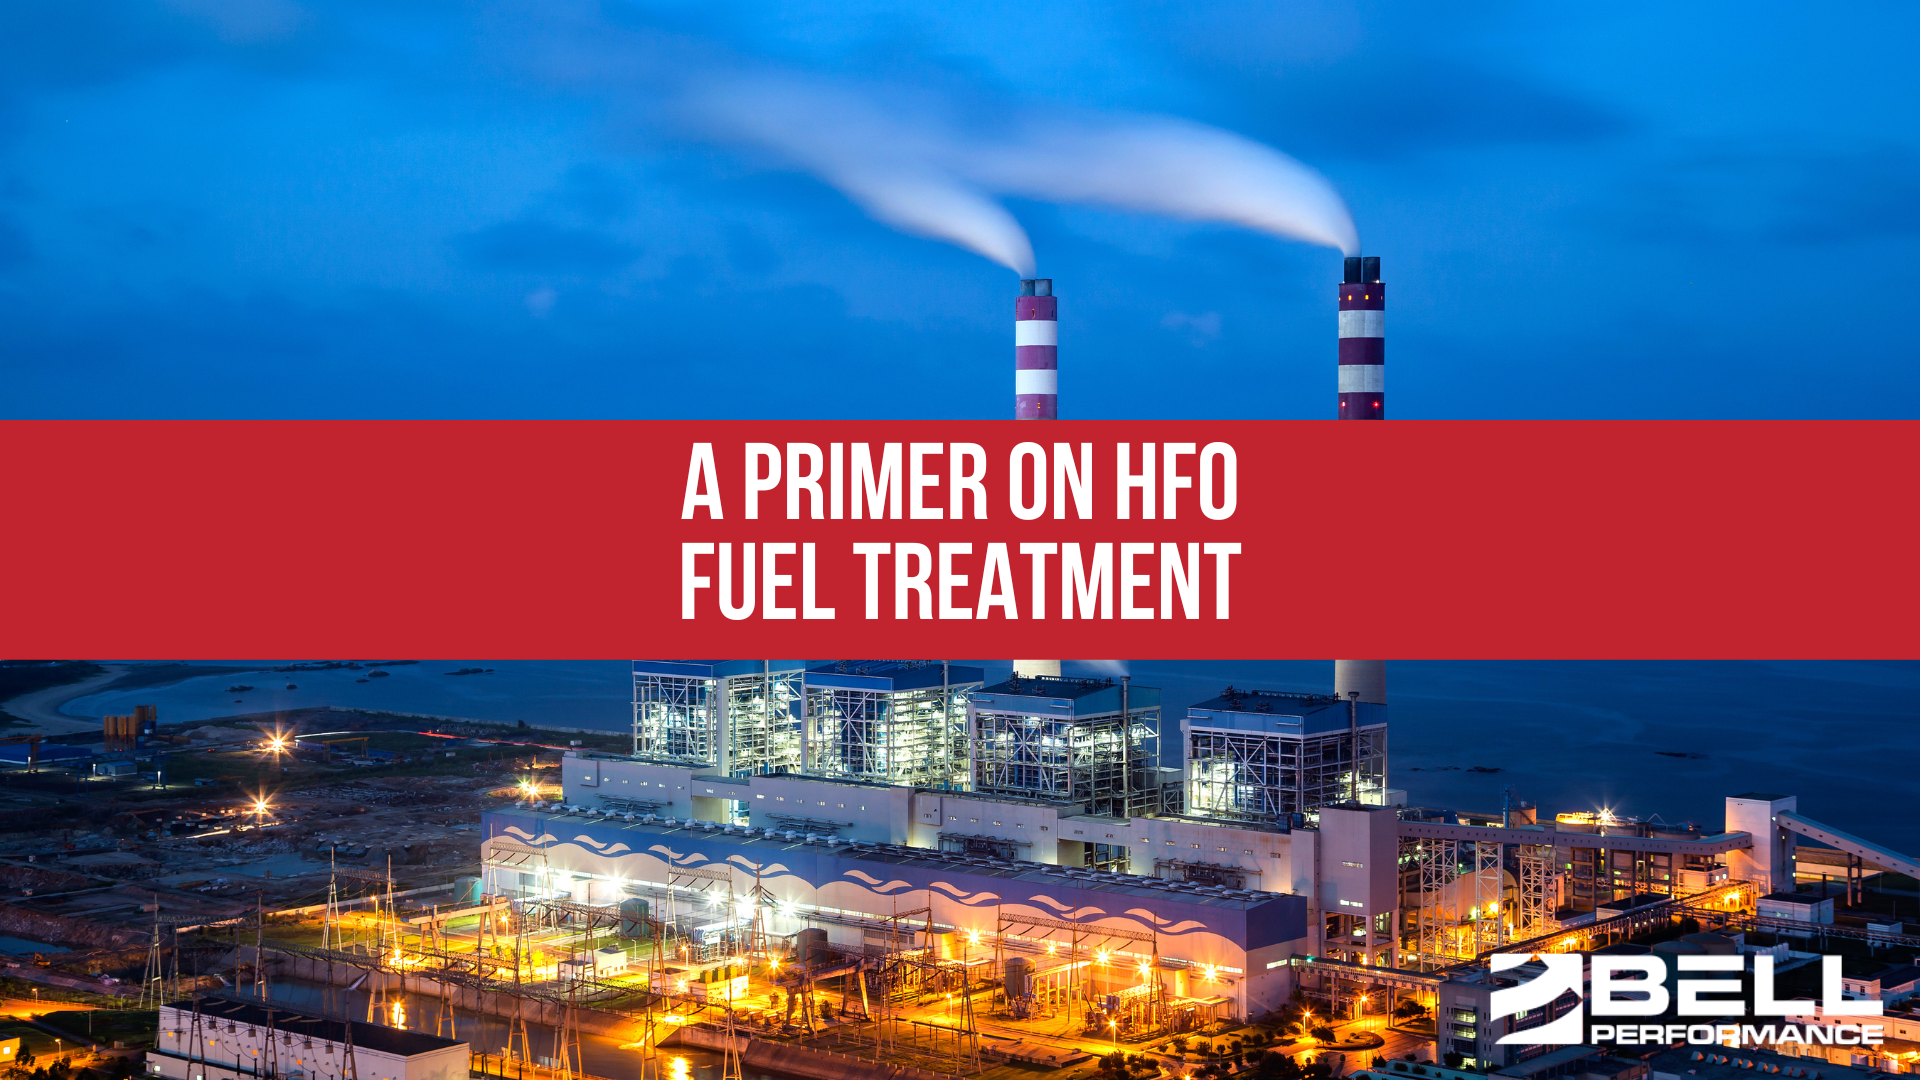 A Primer on HFO Fuel Treatment